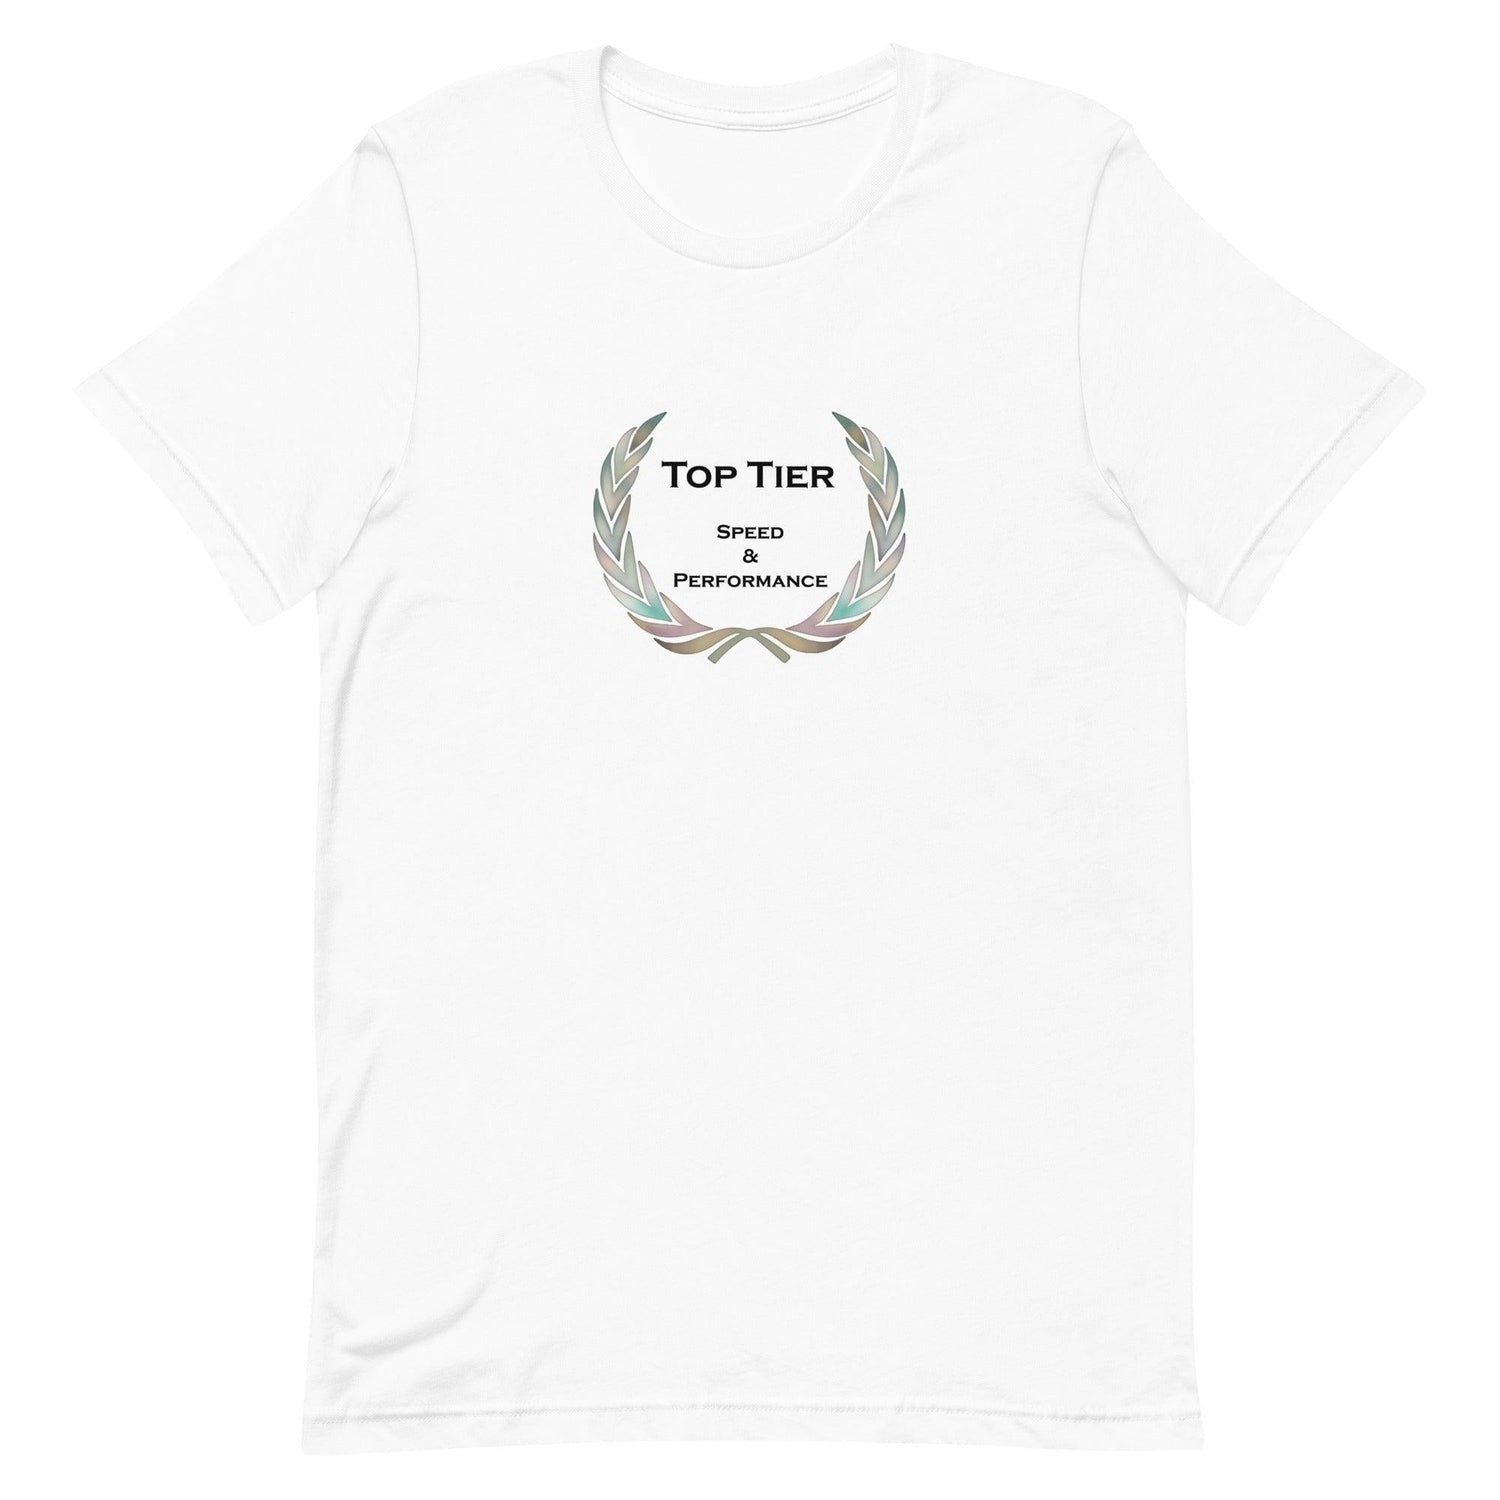 Muna Lee "Top Tier" t-shirt - Fan Arch